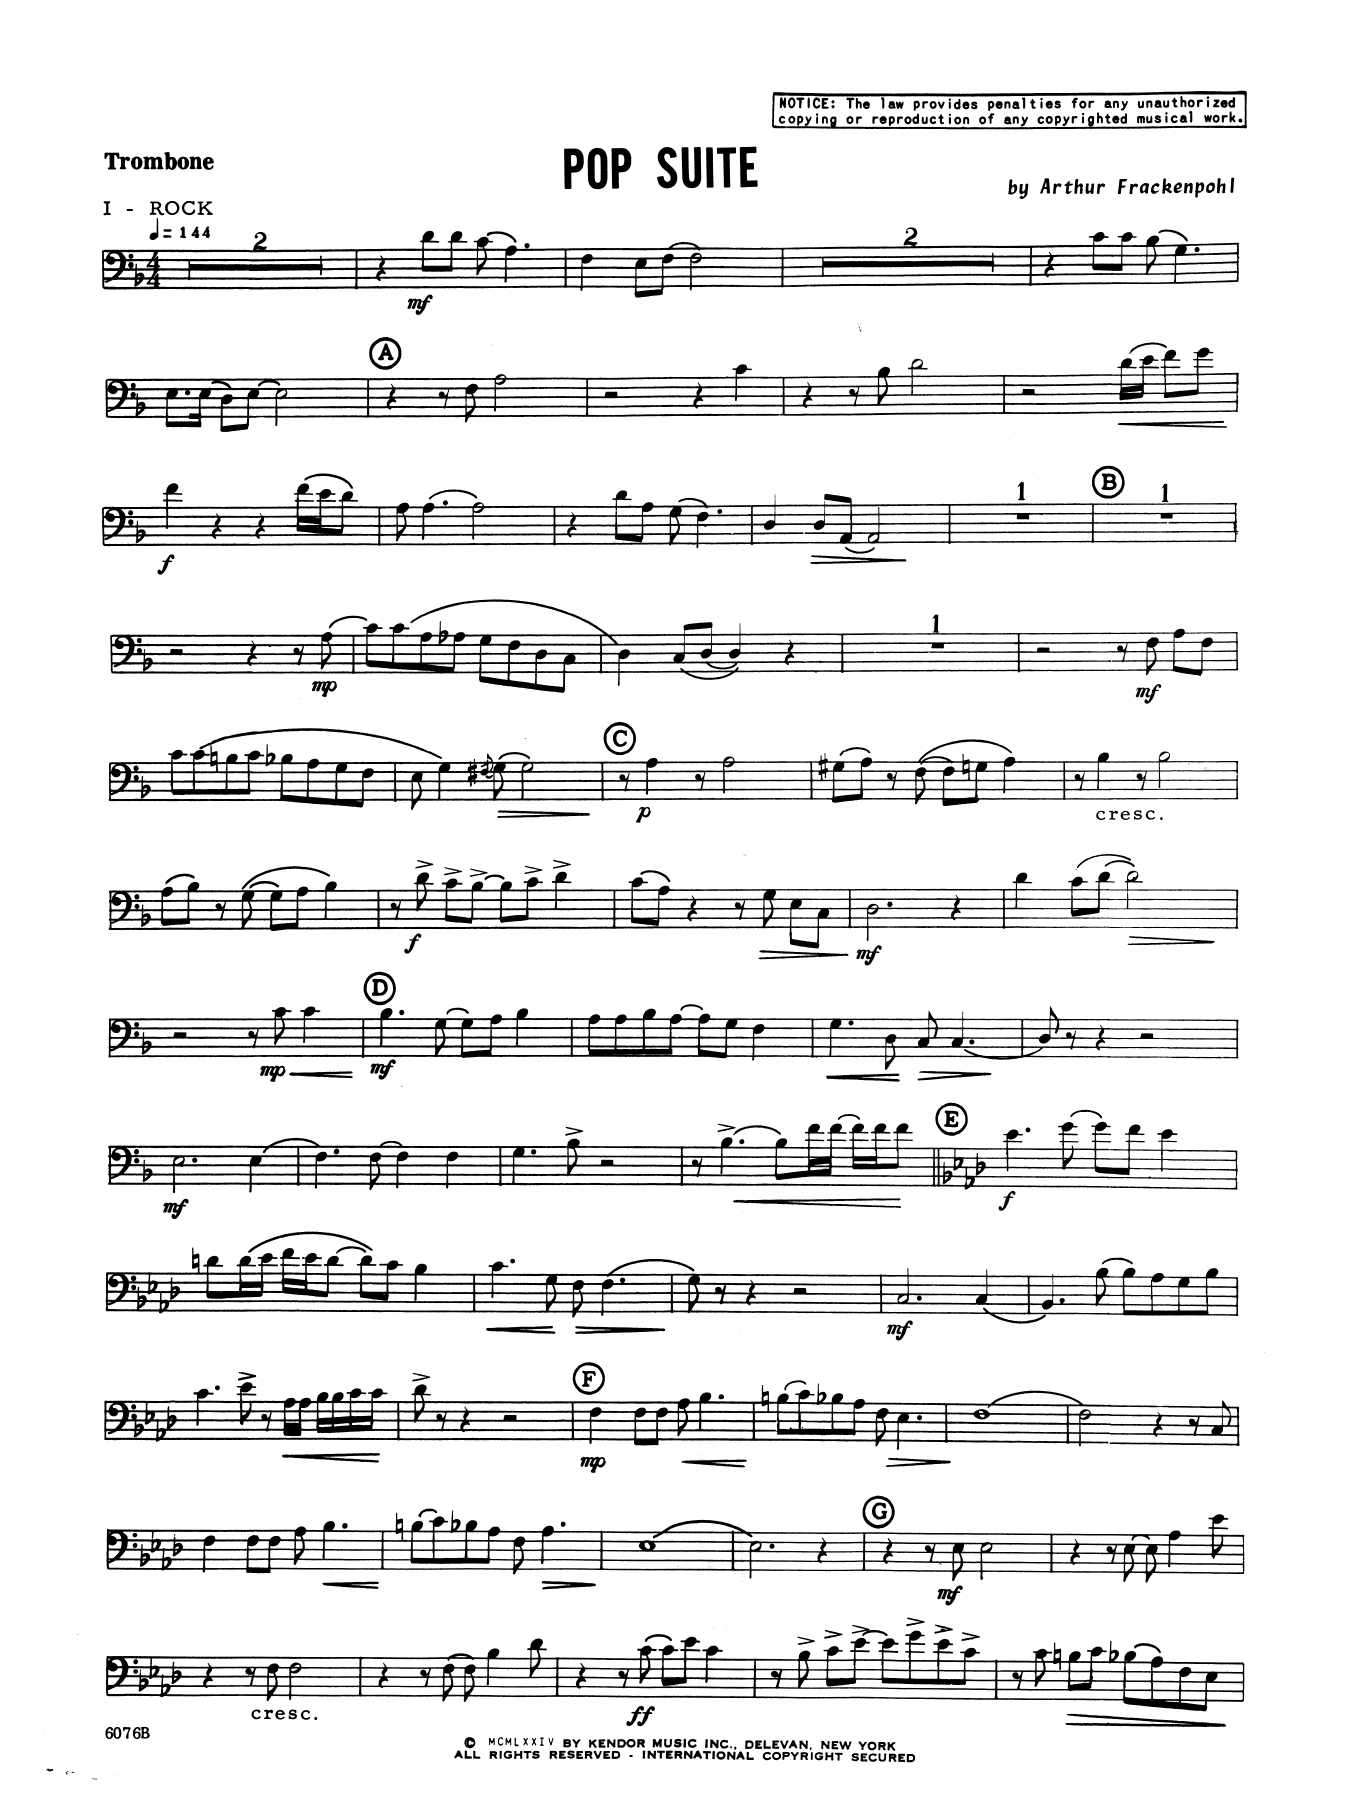 Download Arthur Frackenpohl Pop Suite - Trombone Sheet Music